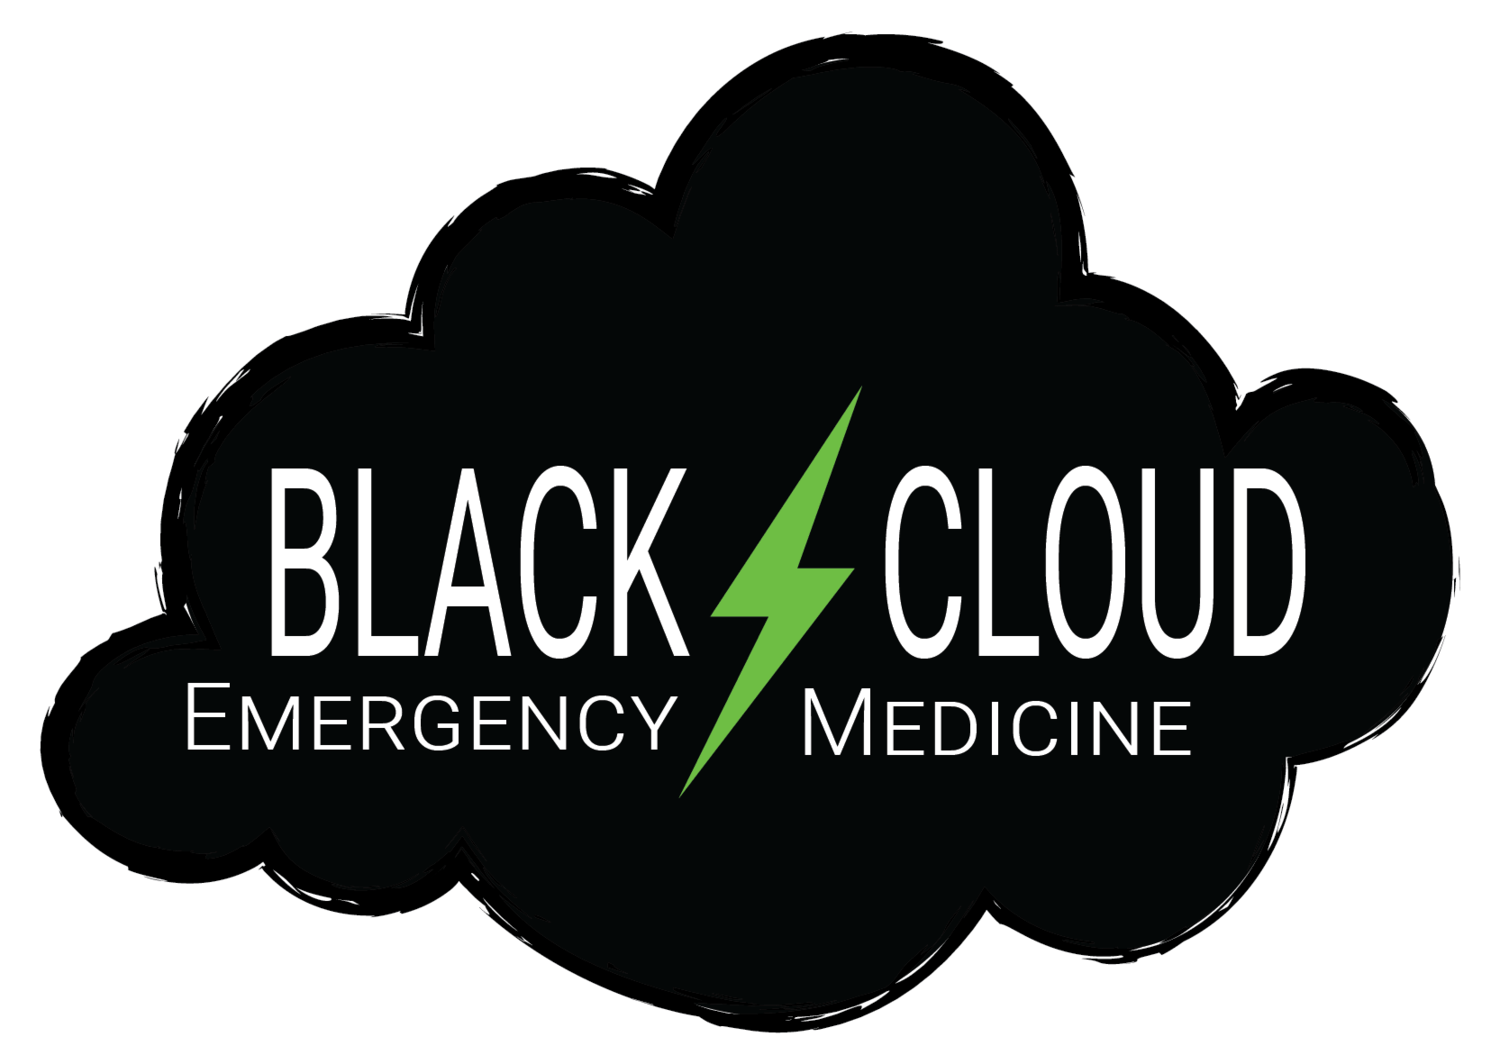 Black Cloud Logo - The Black Cloud